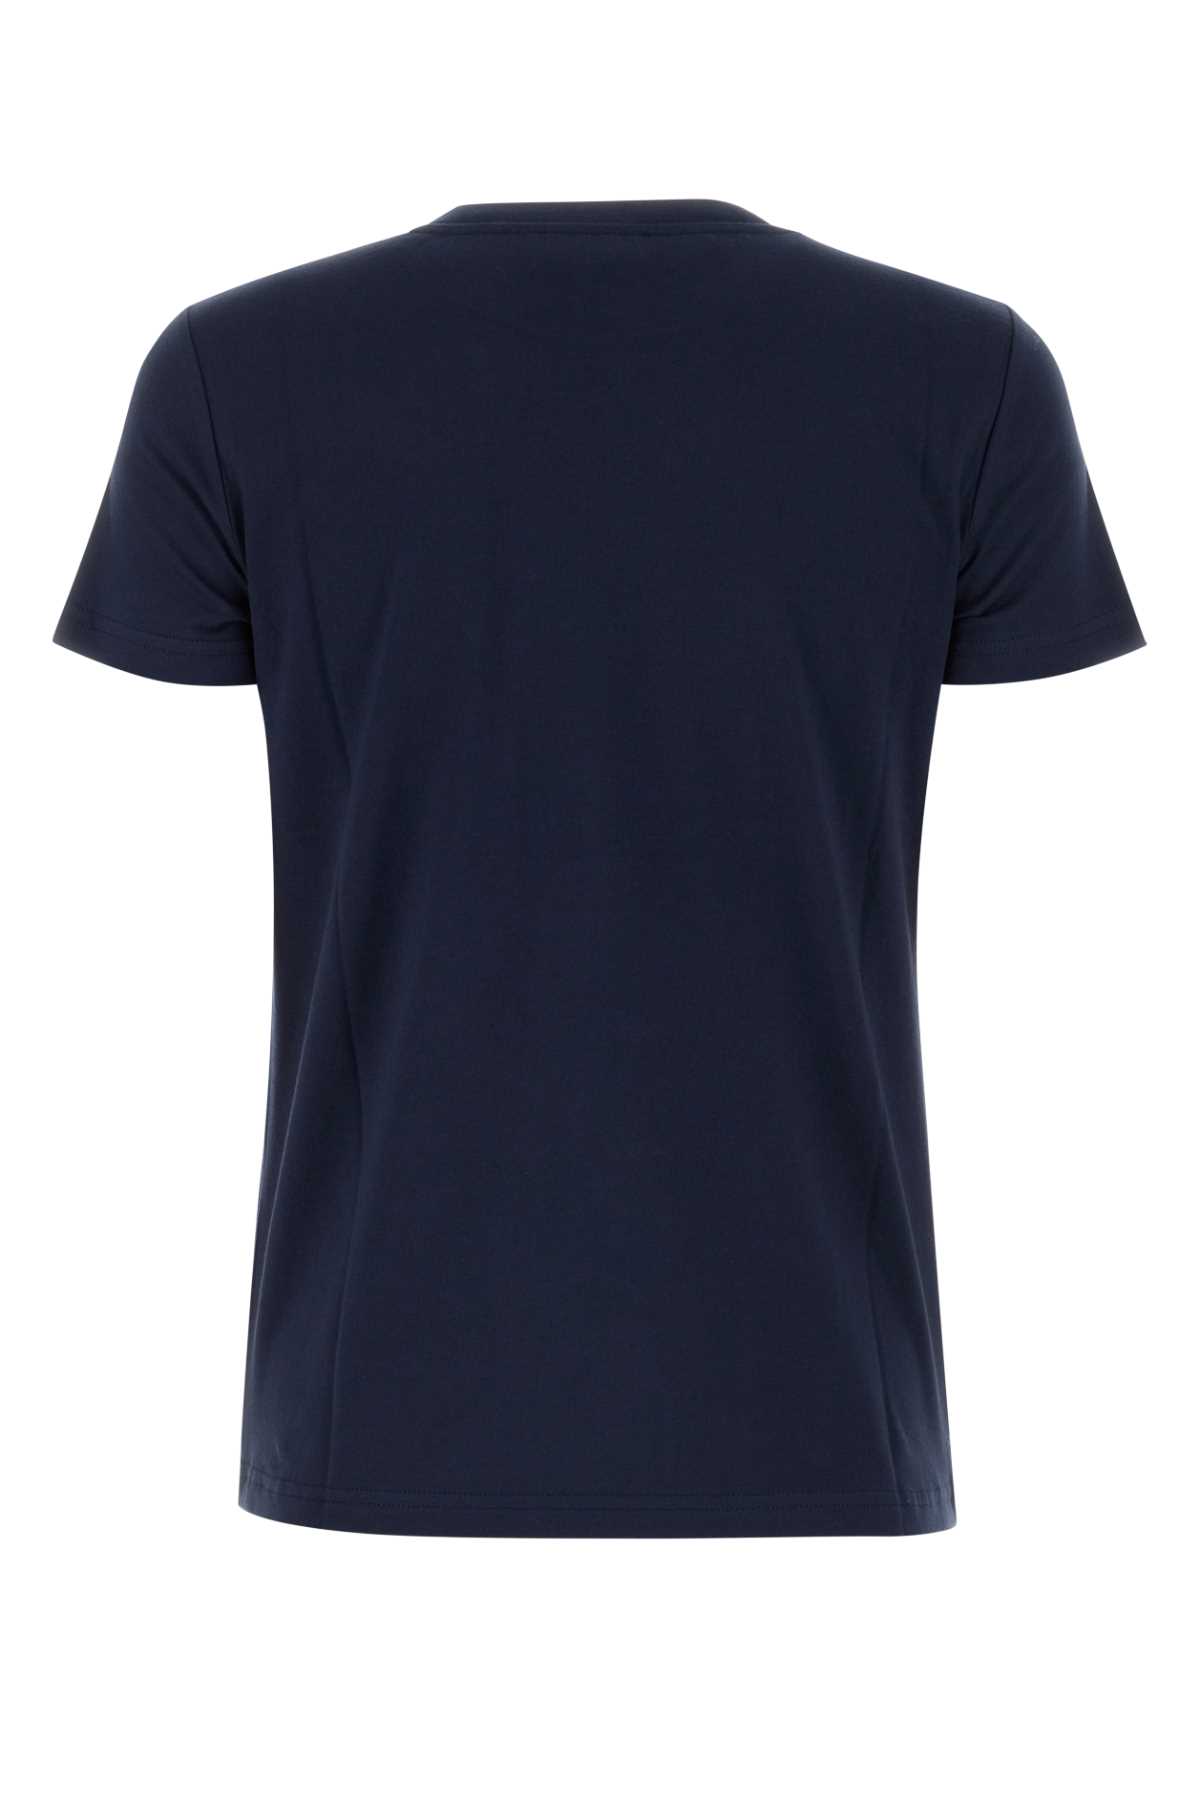 Apc Navy Blue Cotton Item T-shirt